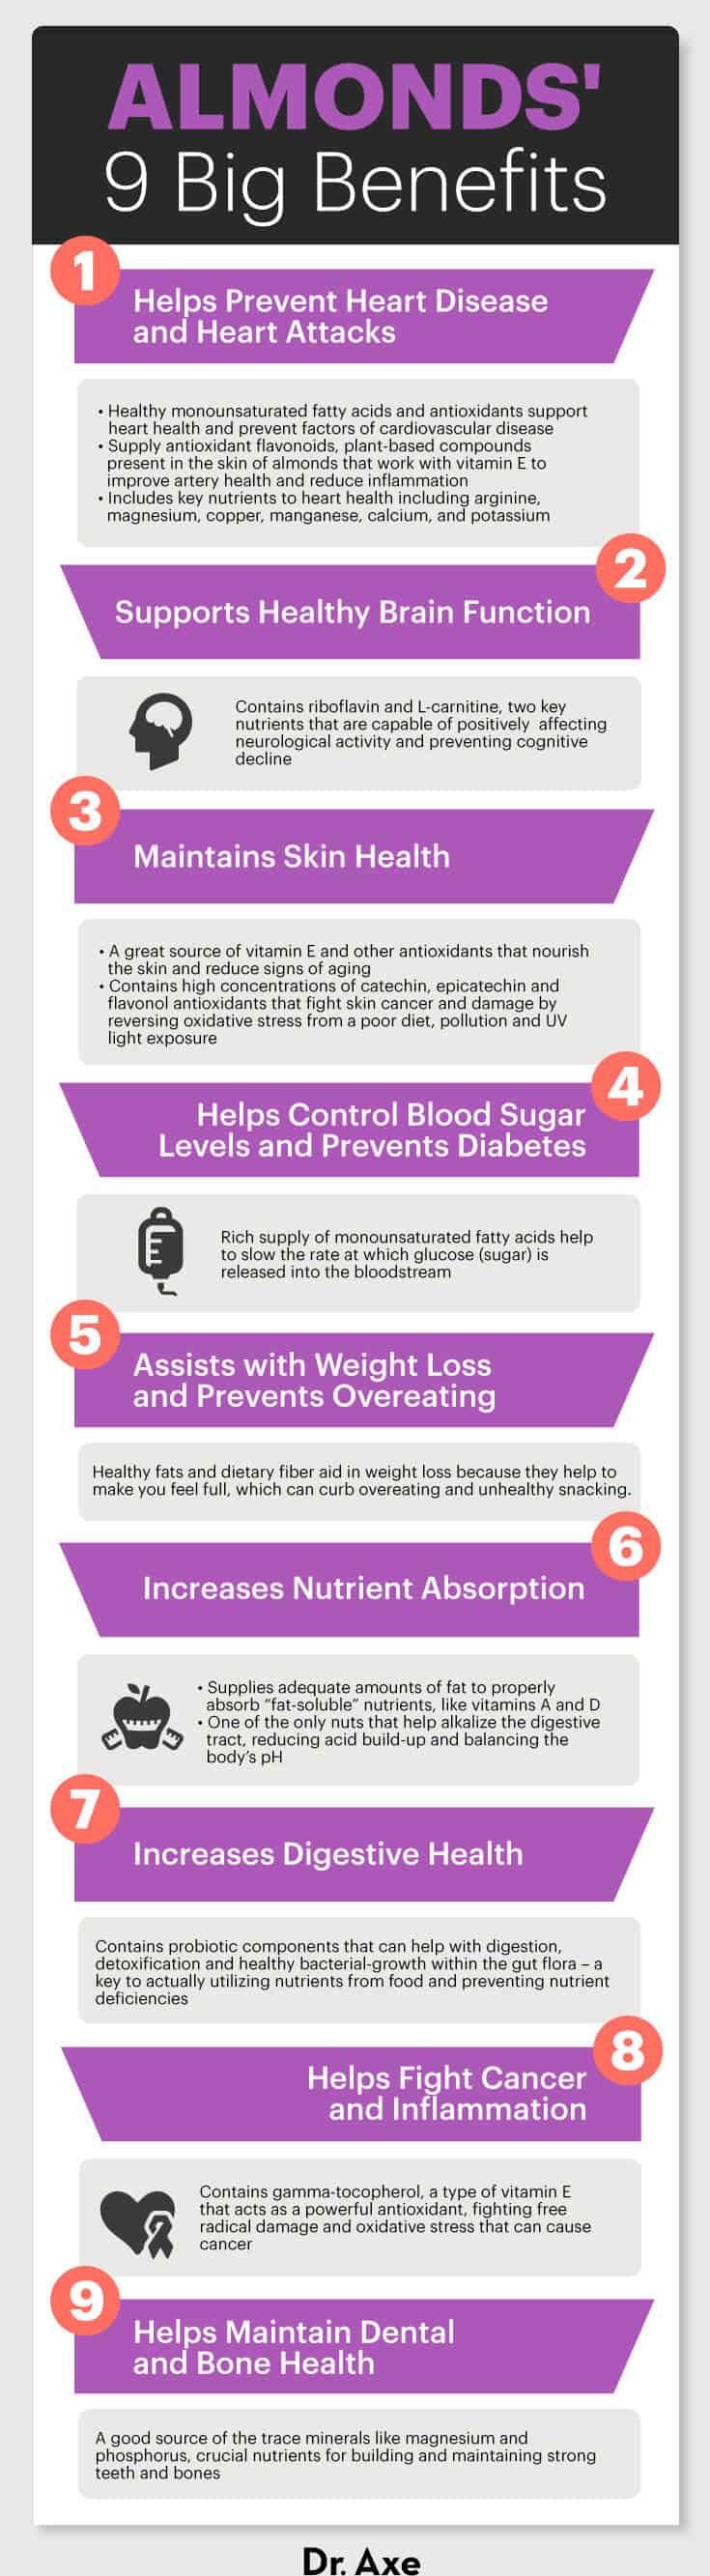 Almonds nutrition benefits